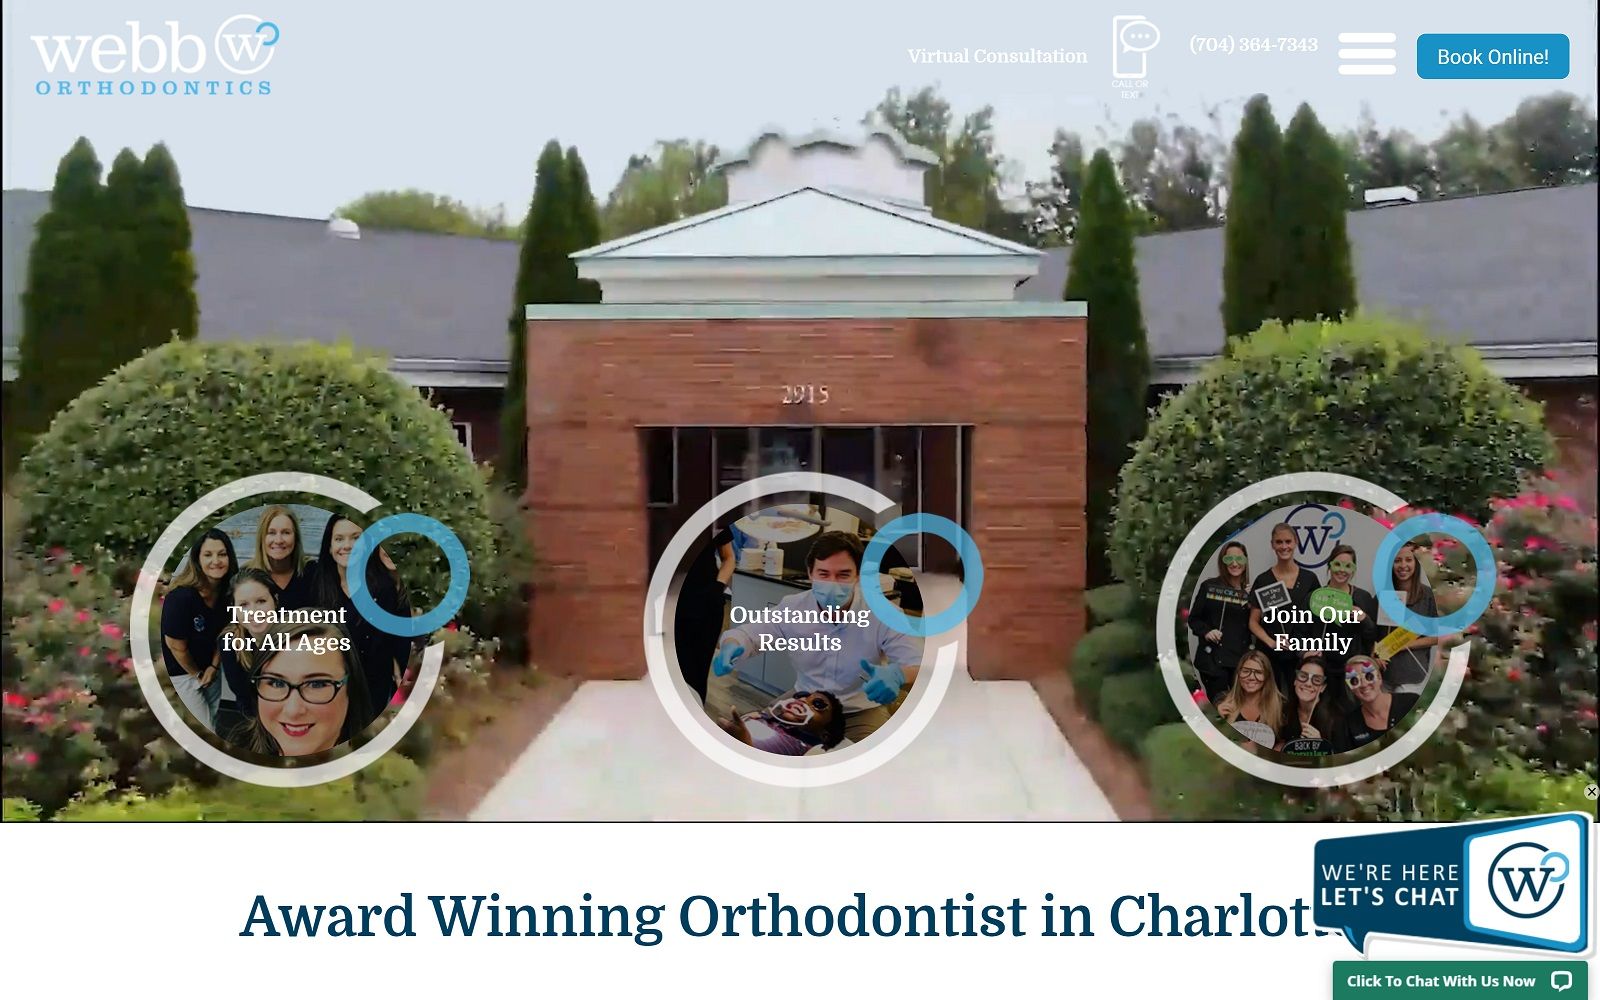 The screenshot of webb orthodontics website